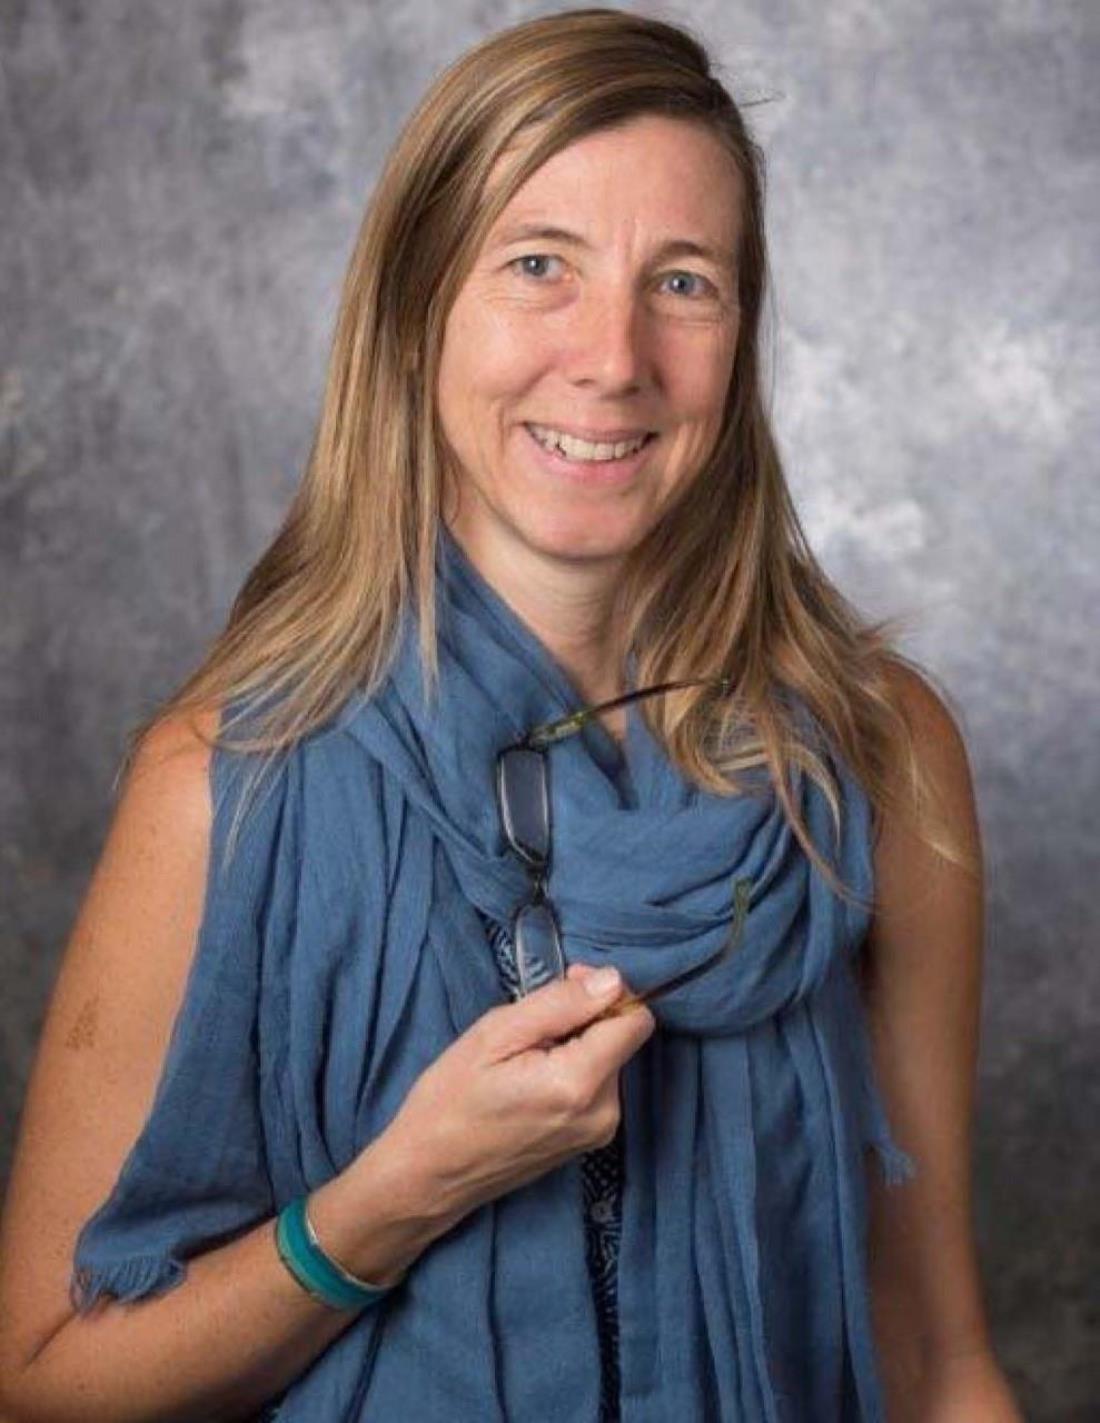 A headshot of Jessie Marshall Zarazaga, a member of the Lyle School of Engineering Faculty.